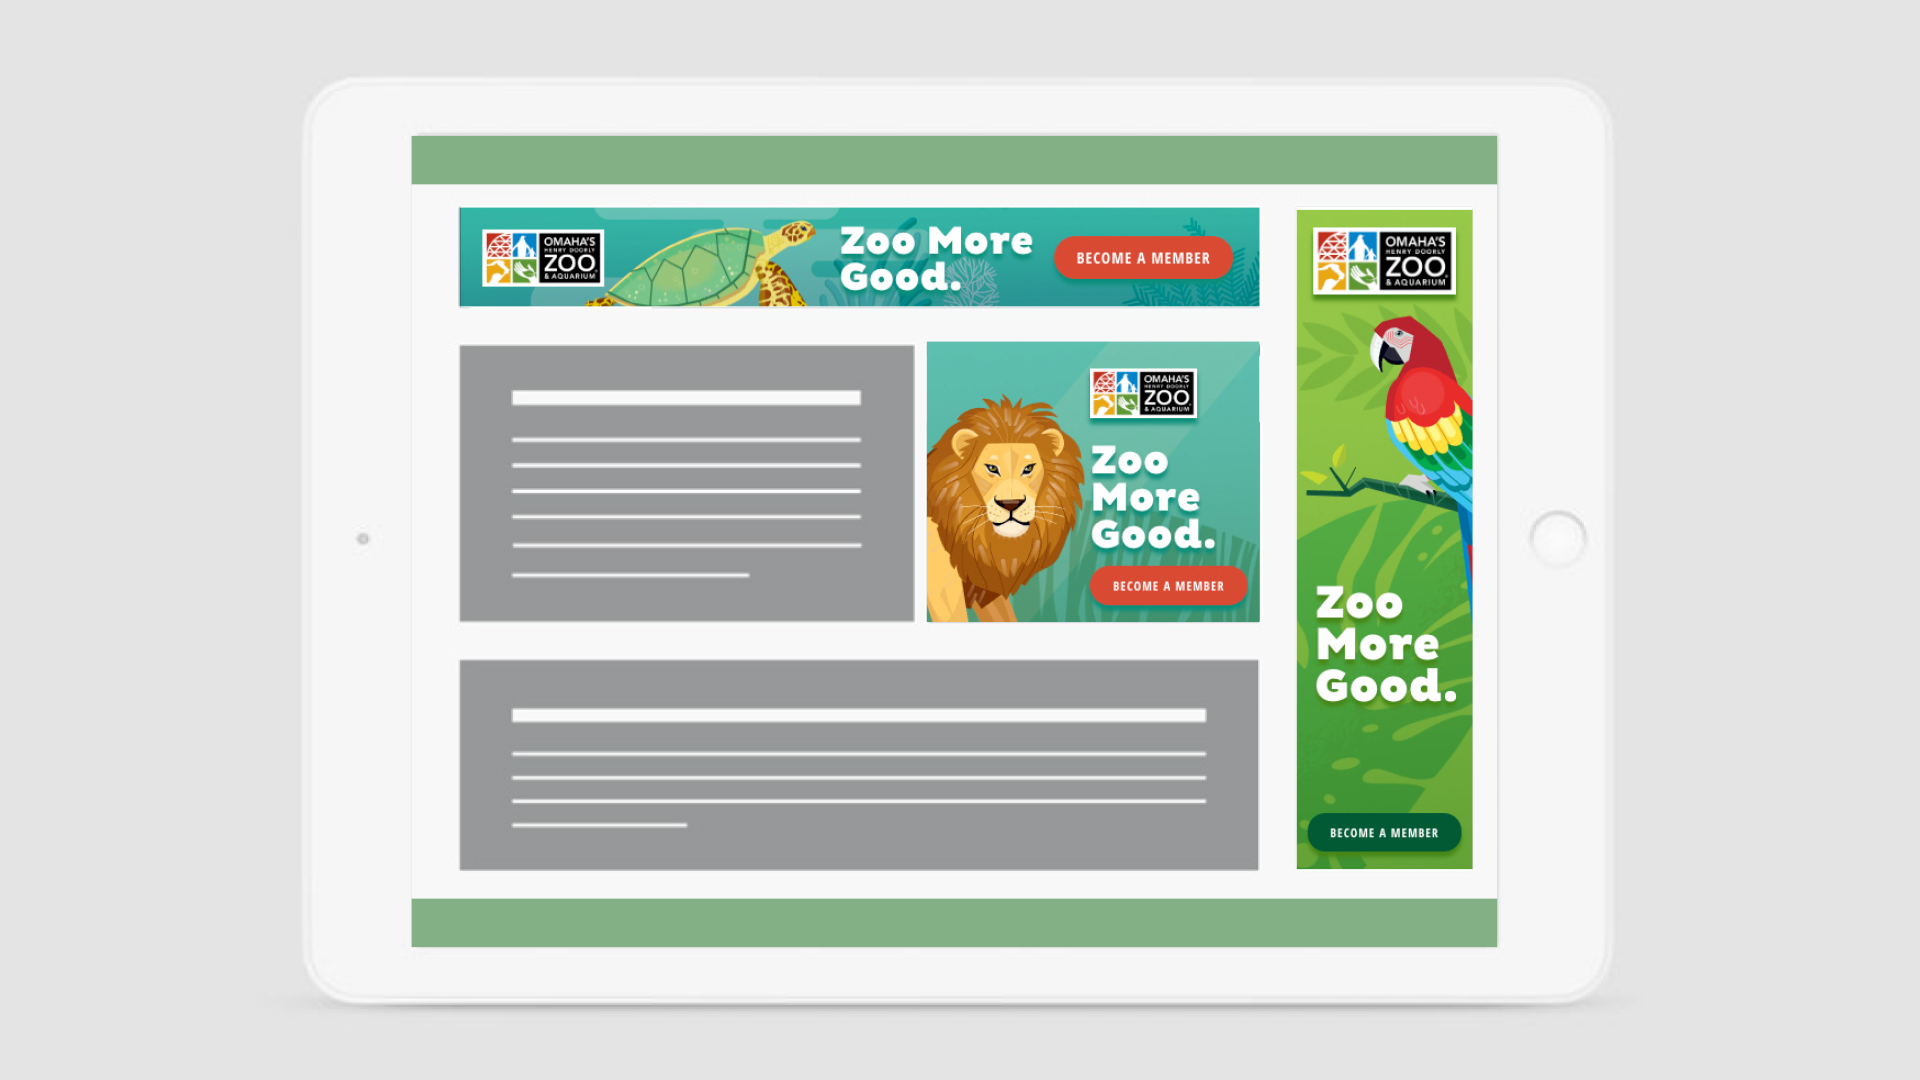 Zoo More Good Display Ads